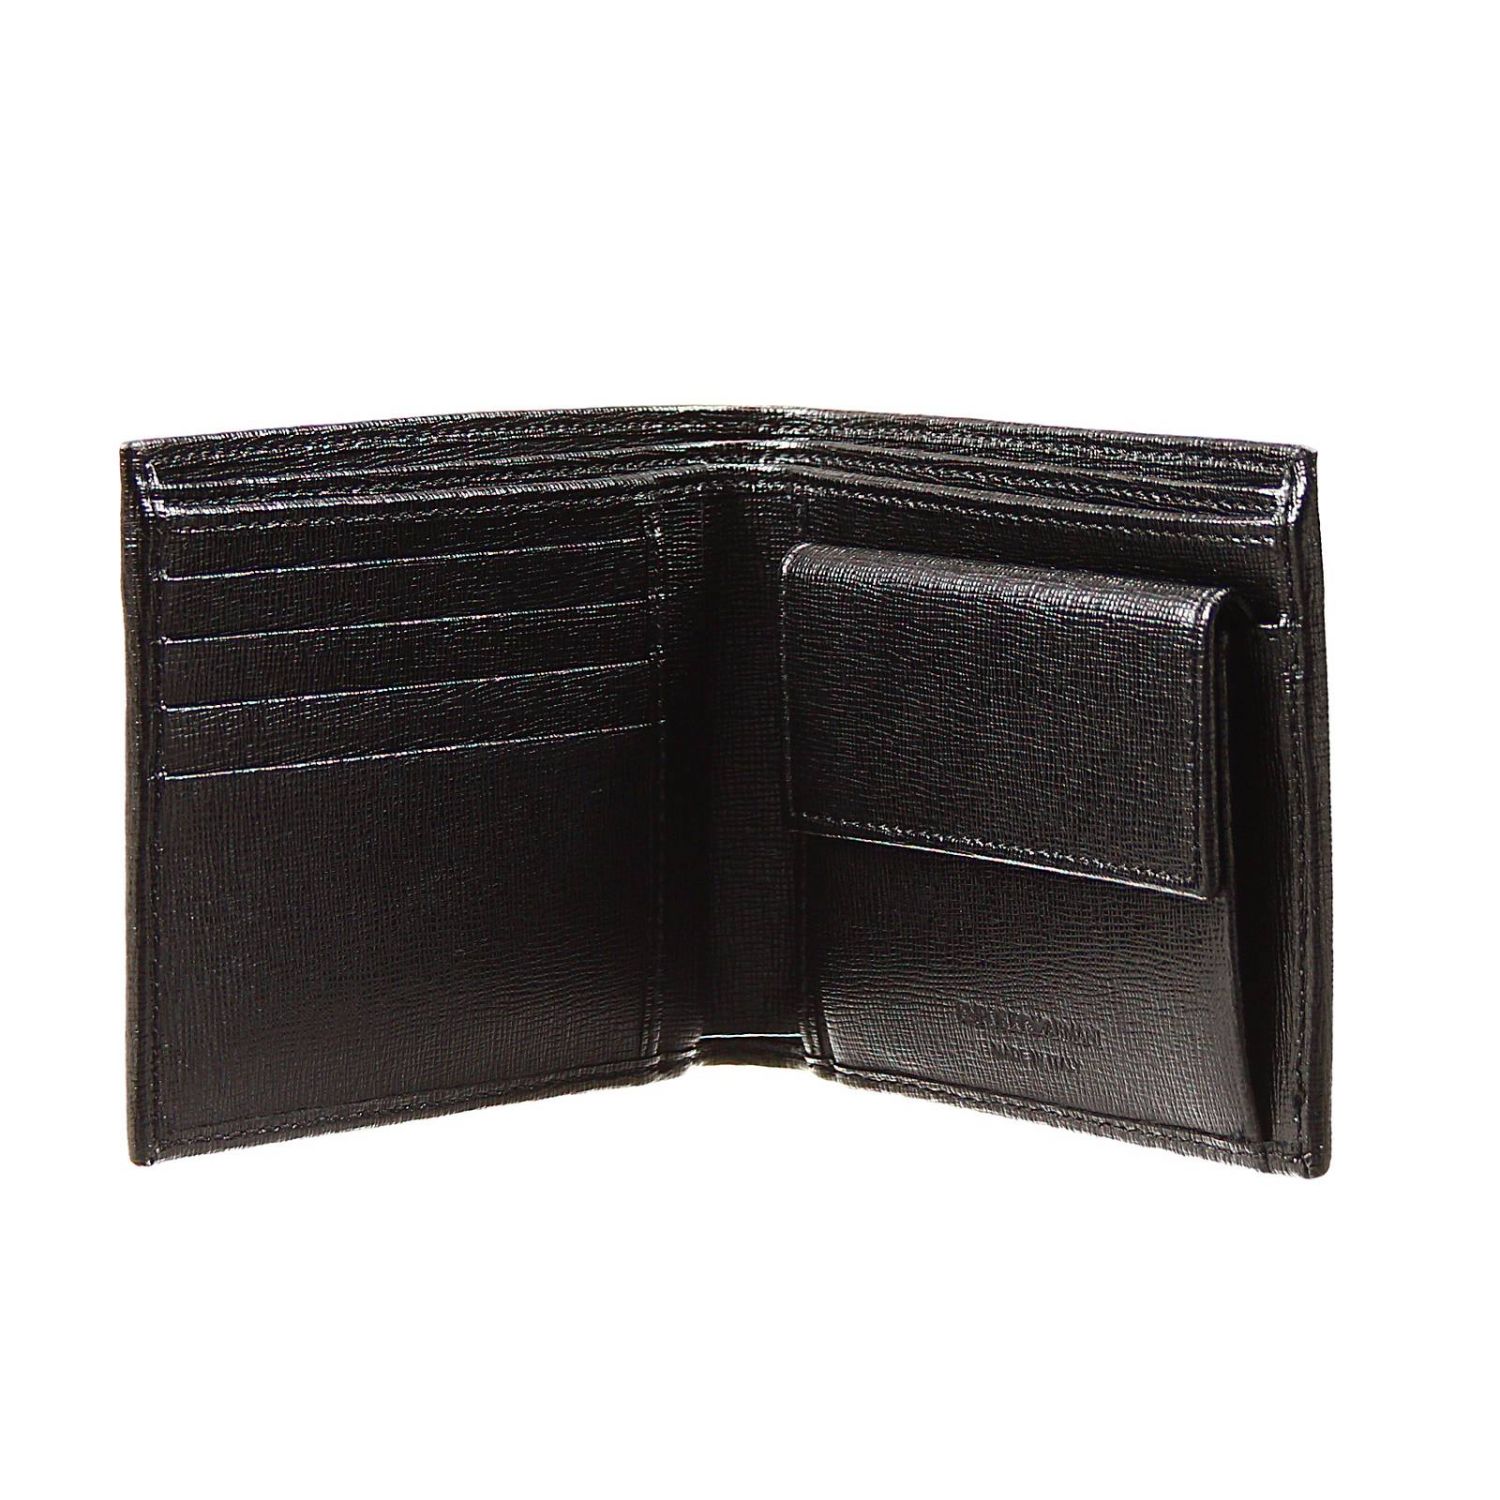 Emporio Armani Outlet: wallet leather credit card holder | Wallet ...